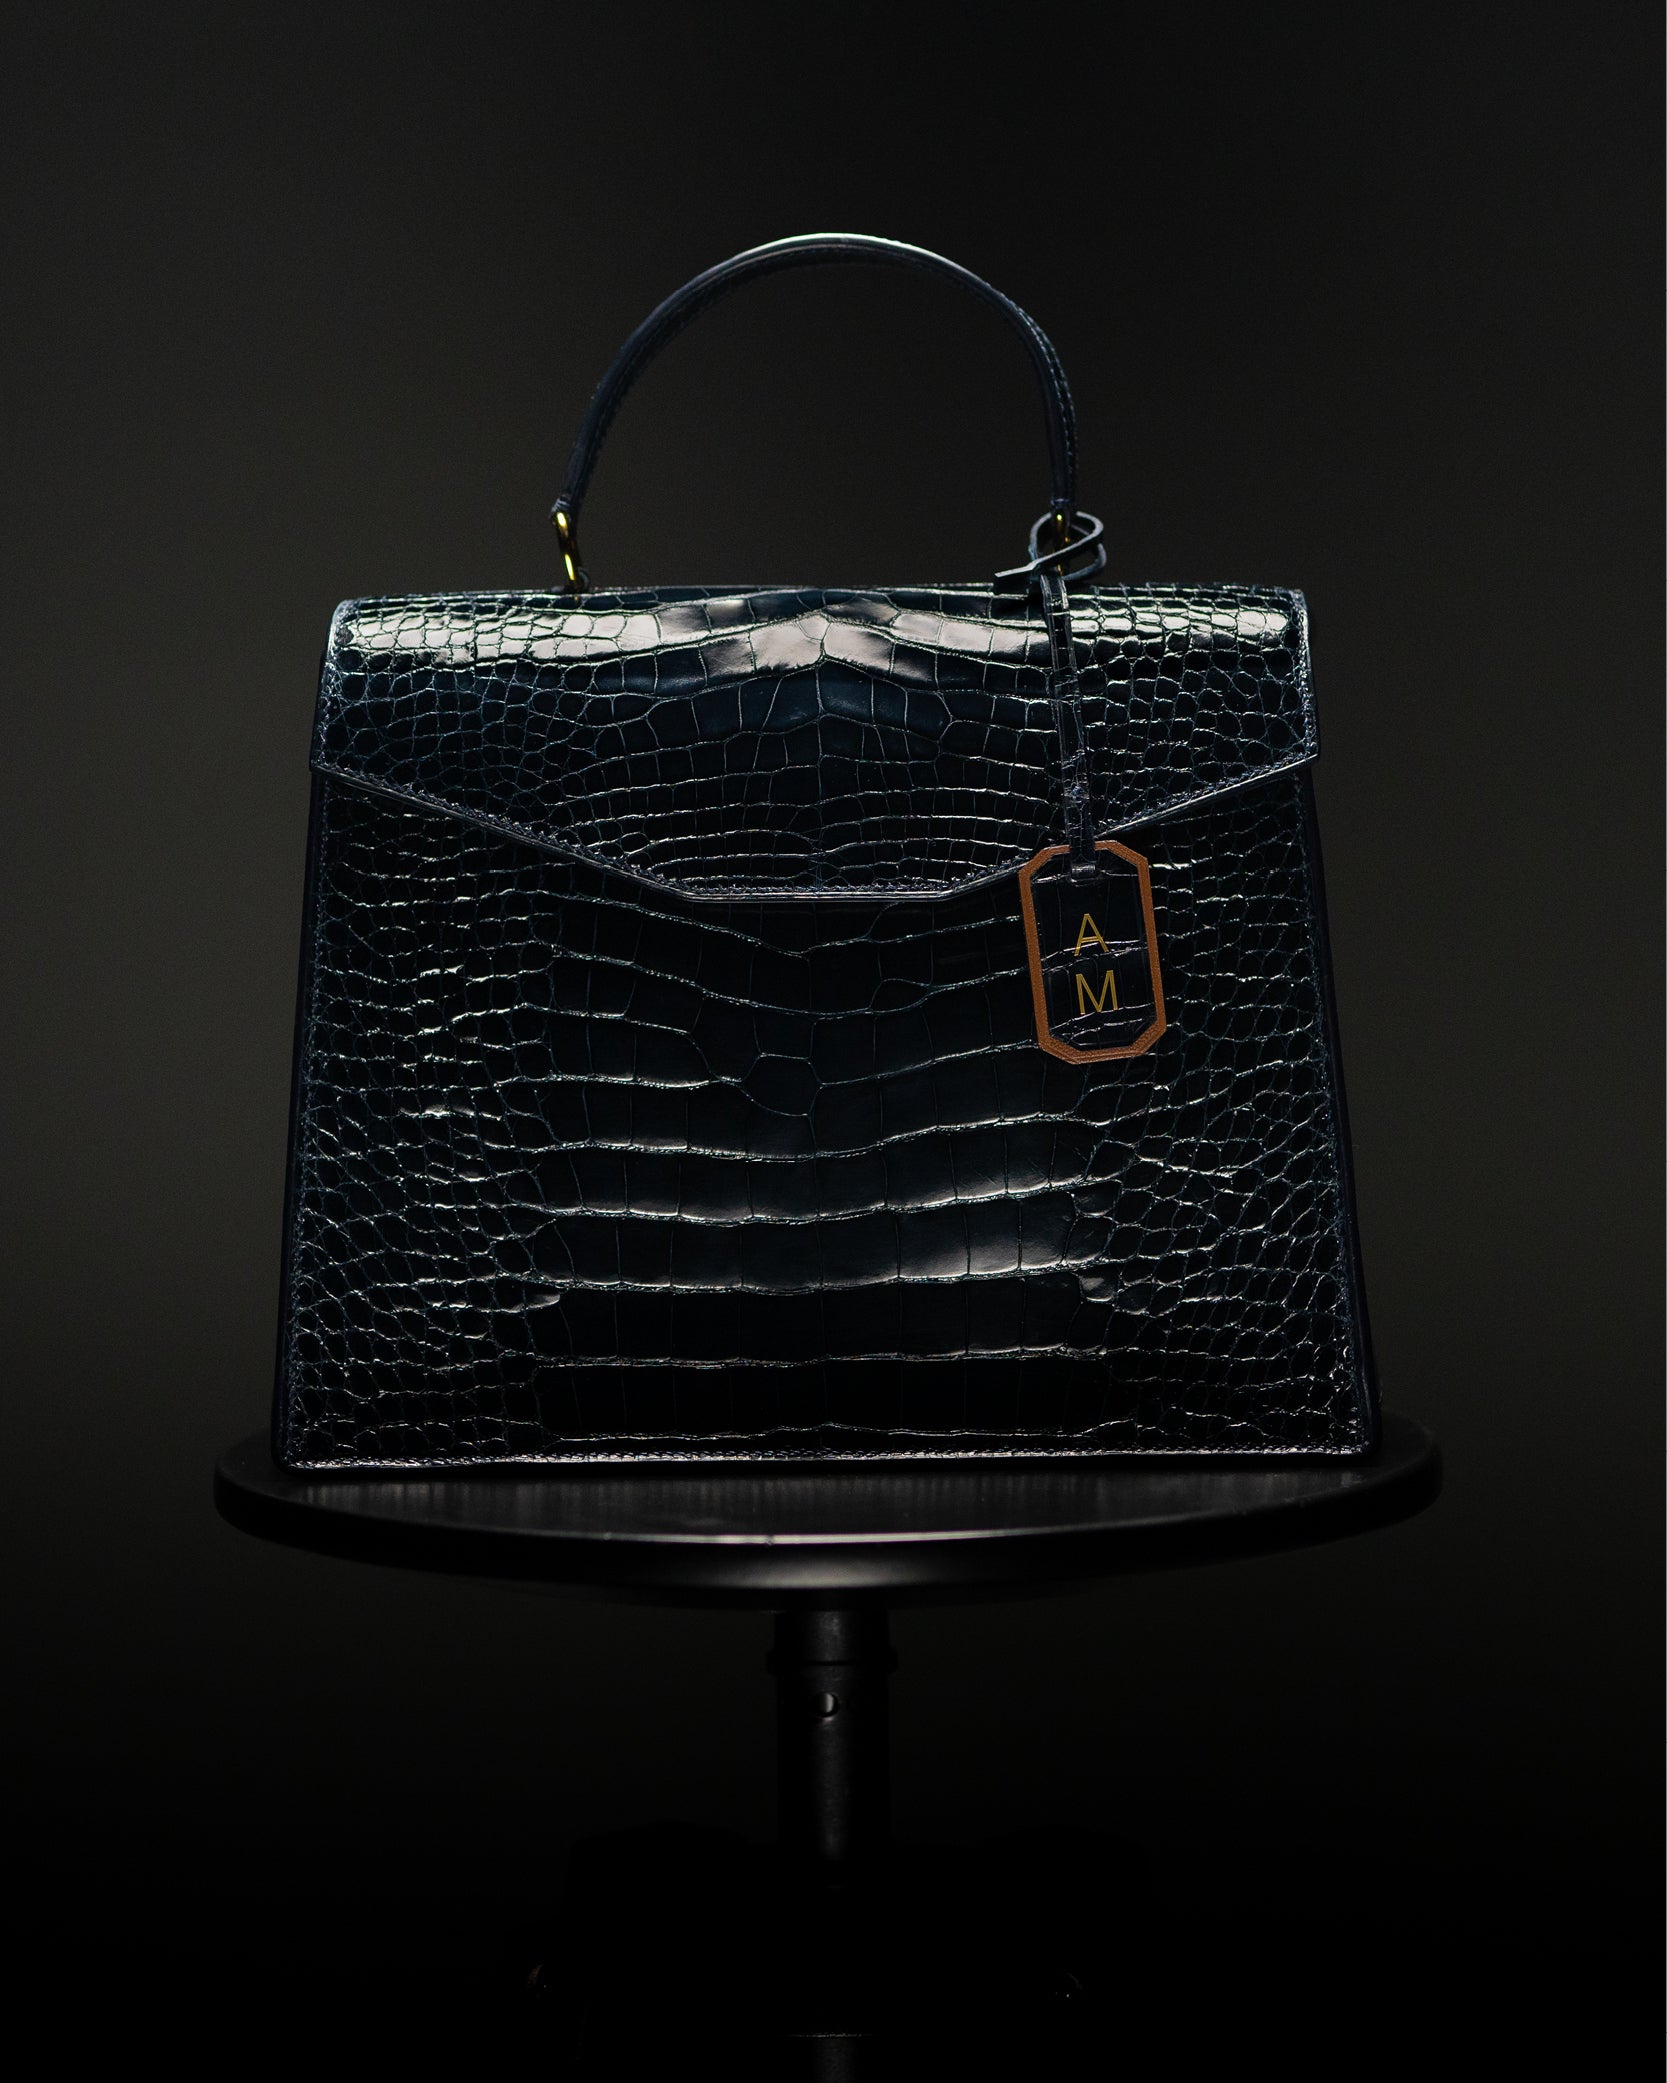 BARWA Mernan Handbag in Black Glazed Alligator on a Black Background